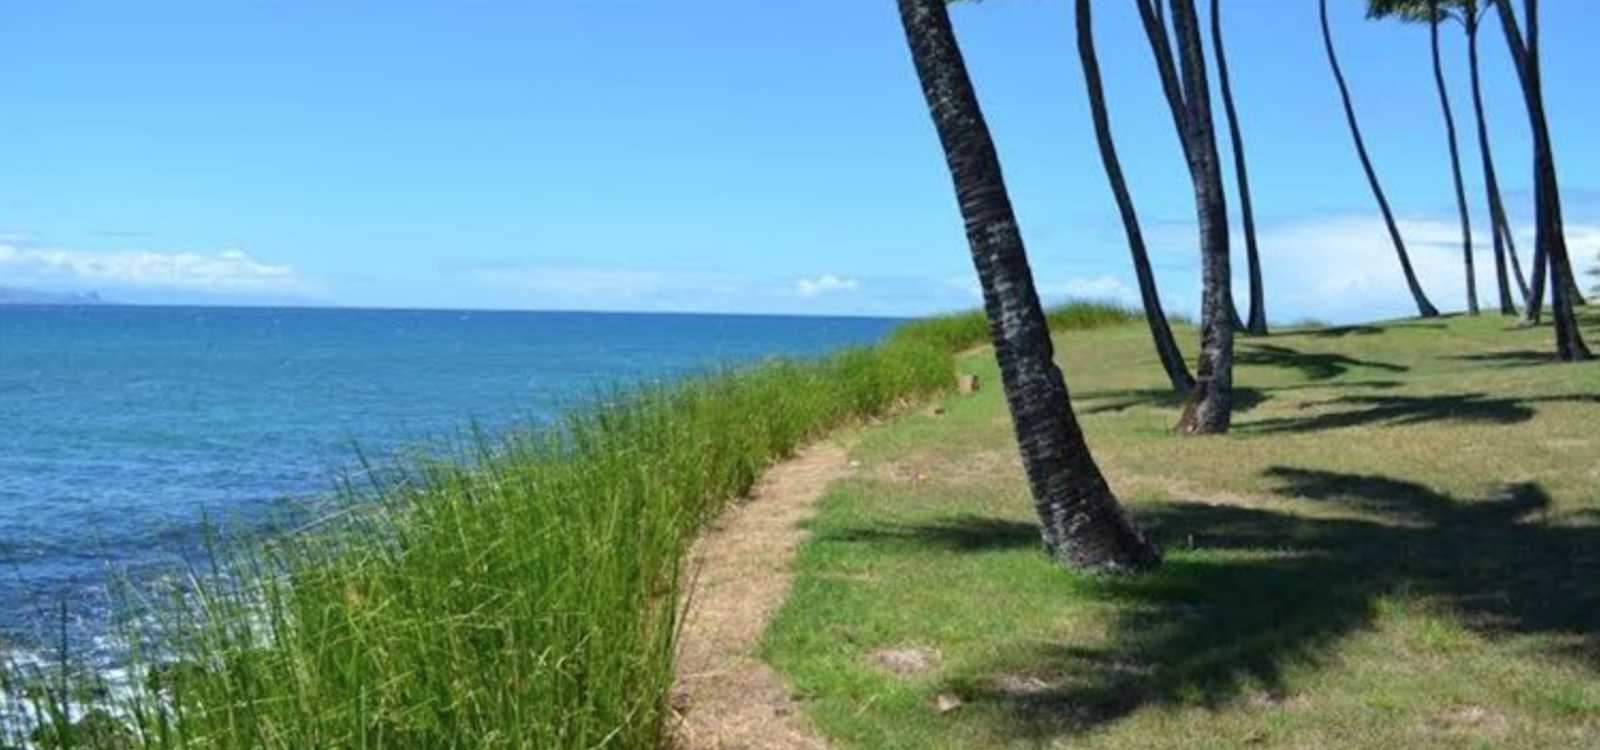 grasses help stop beach erosion